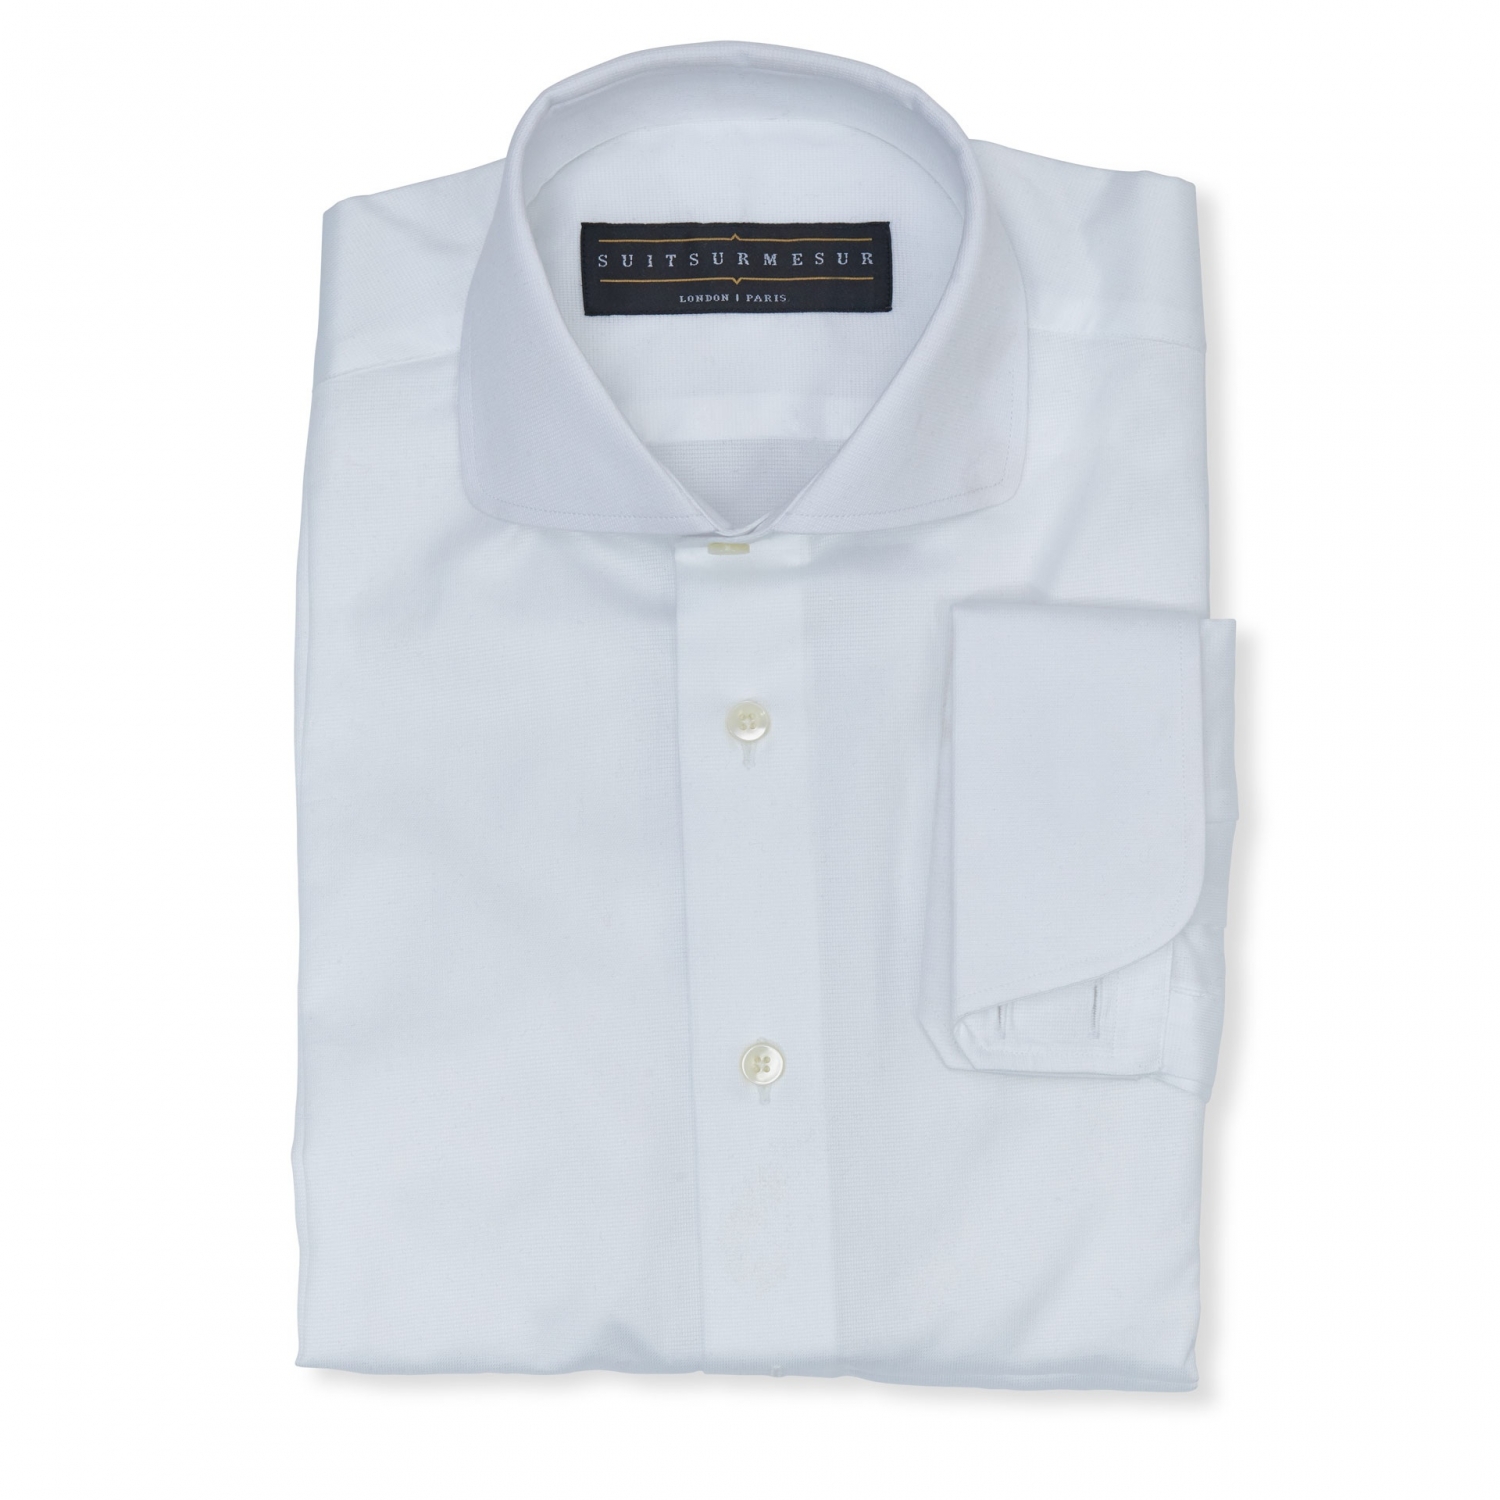 White (round Italian collar) royal classic shirt - 100% cotton Canclini fabric 